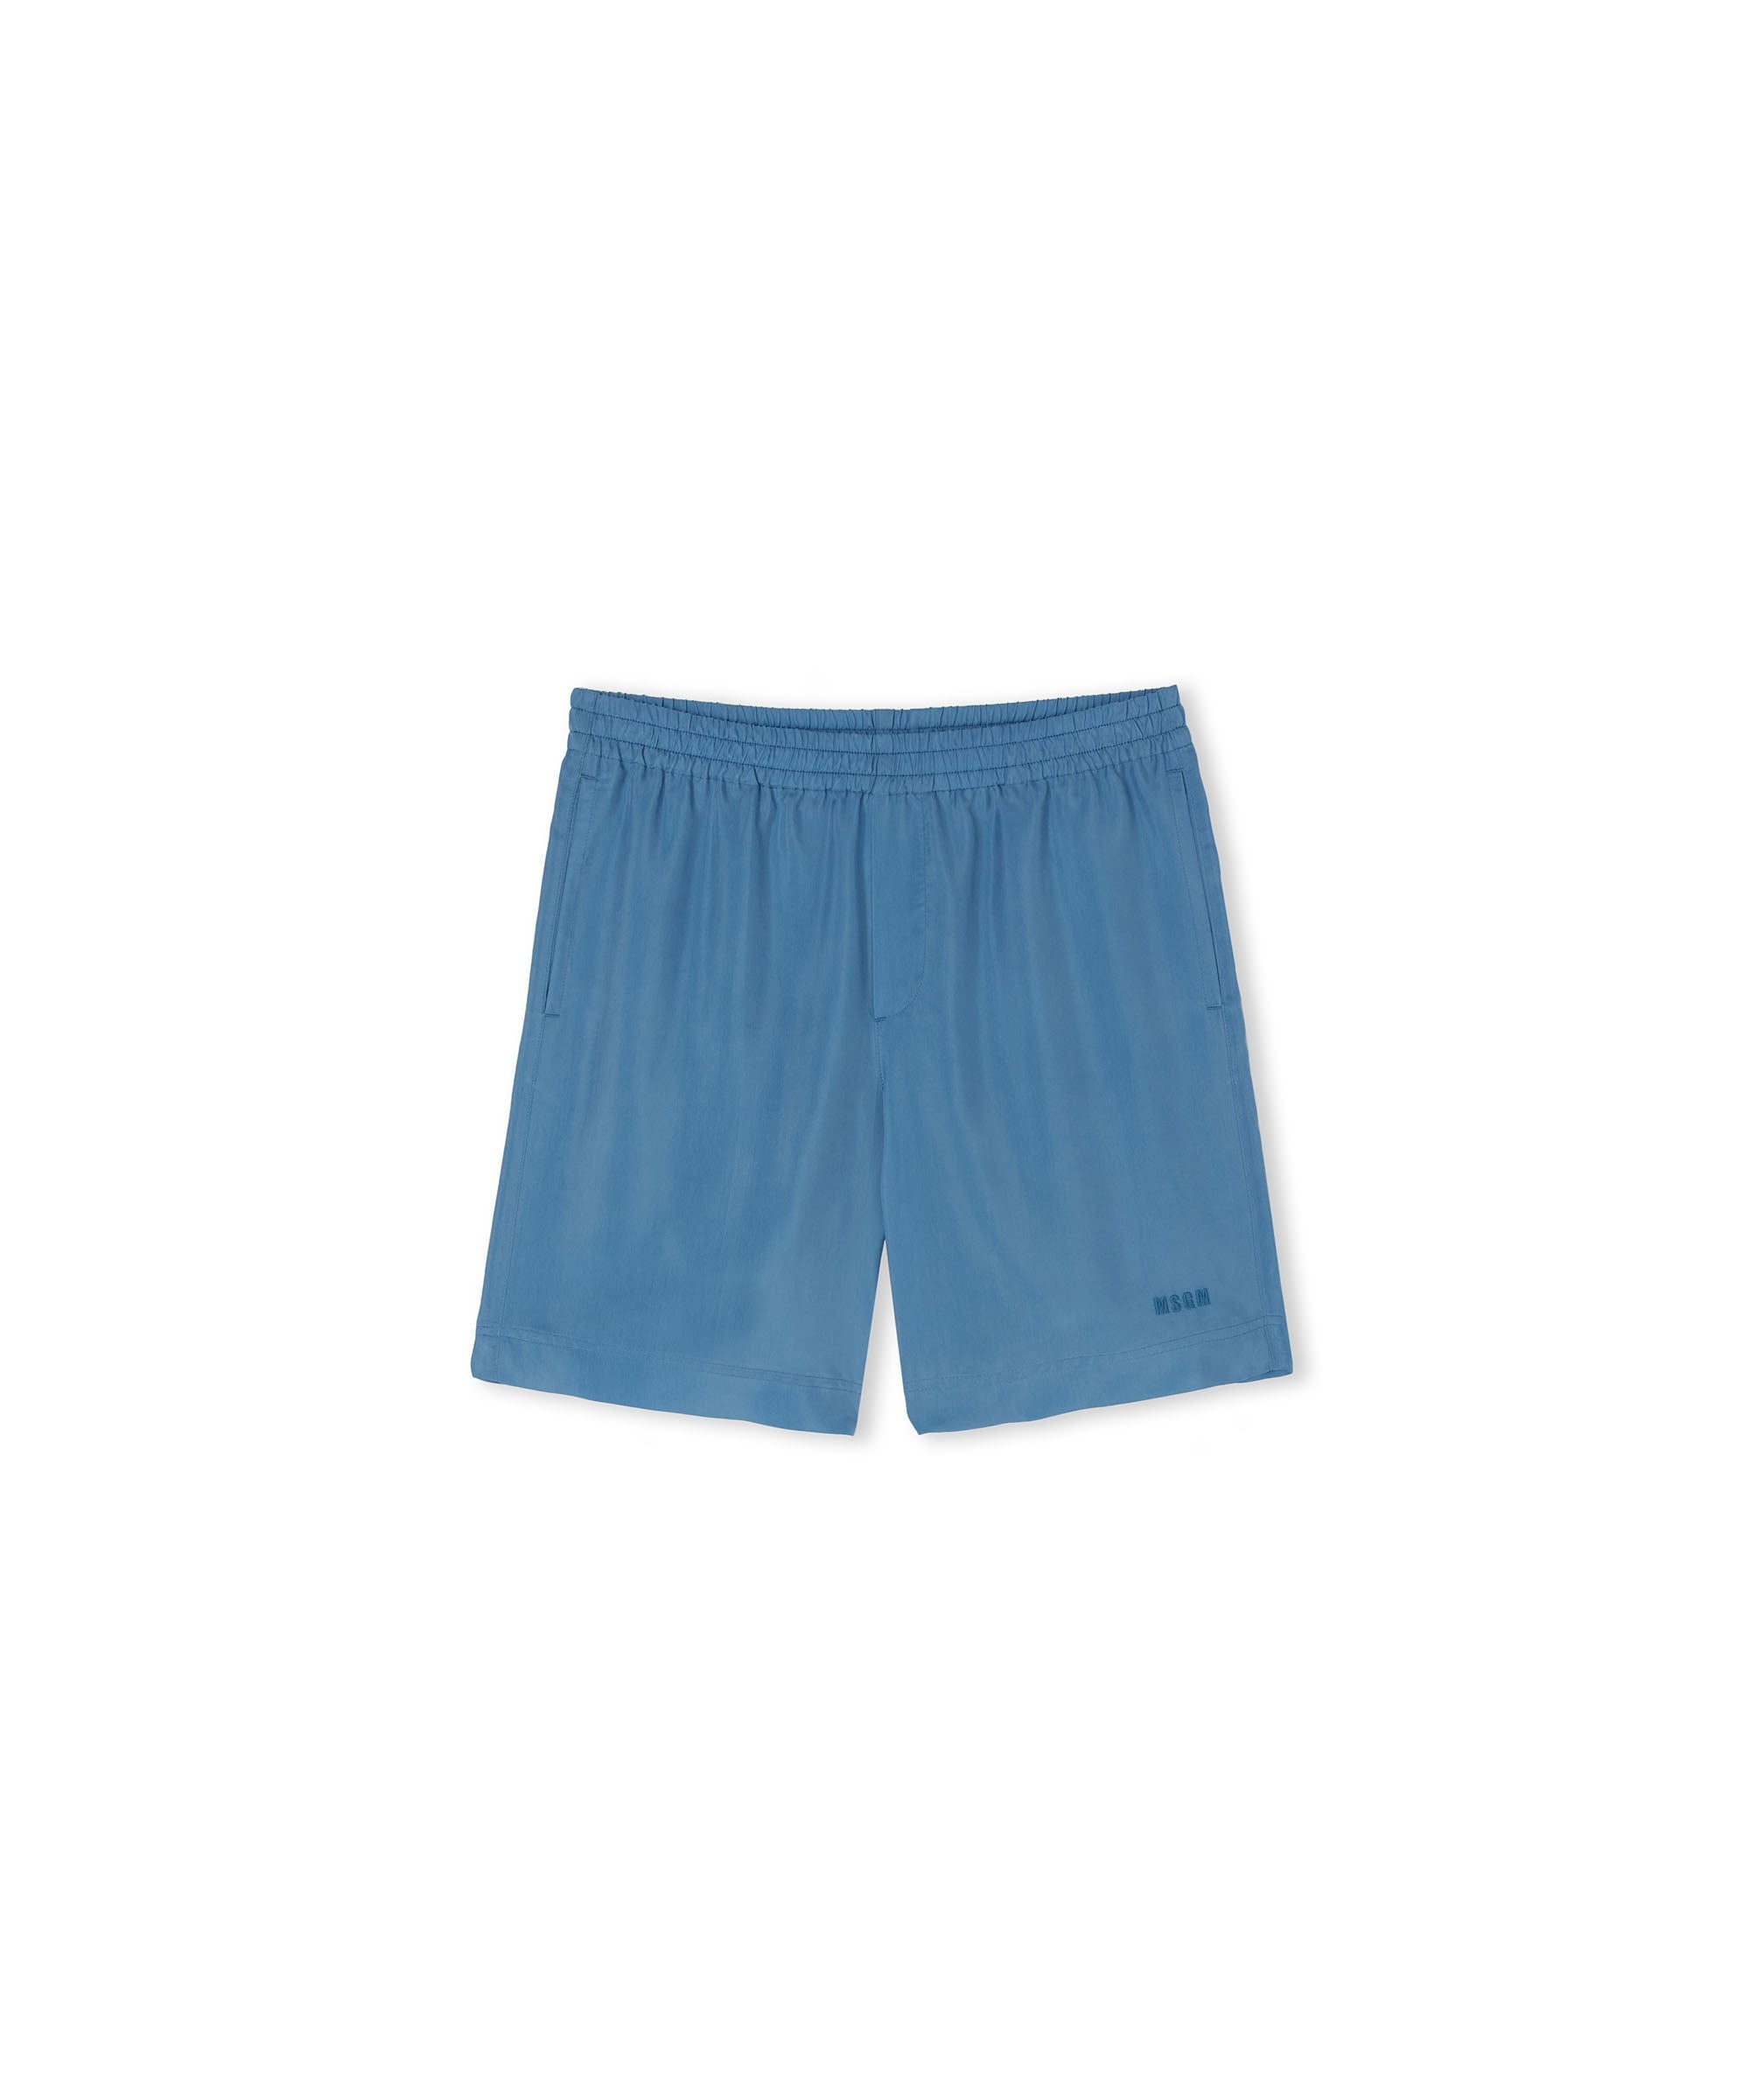 Cupro shorts - 1